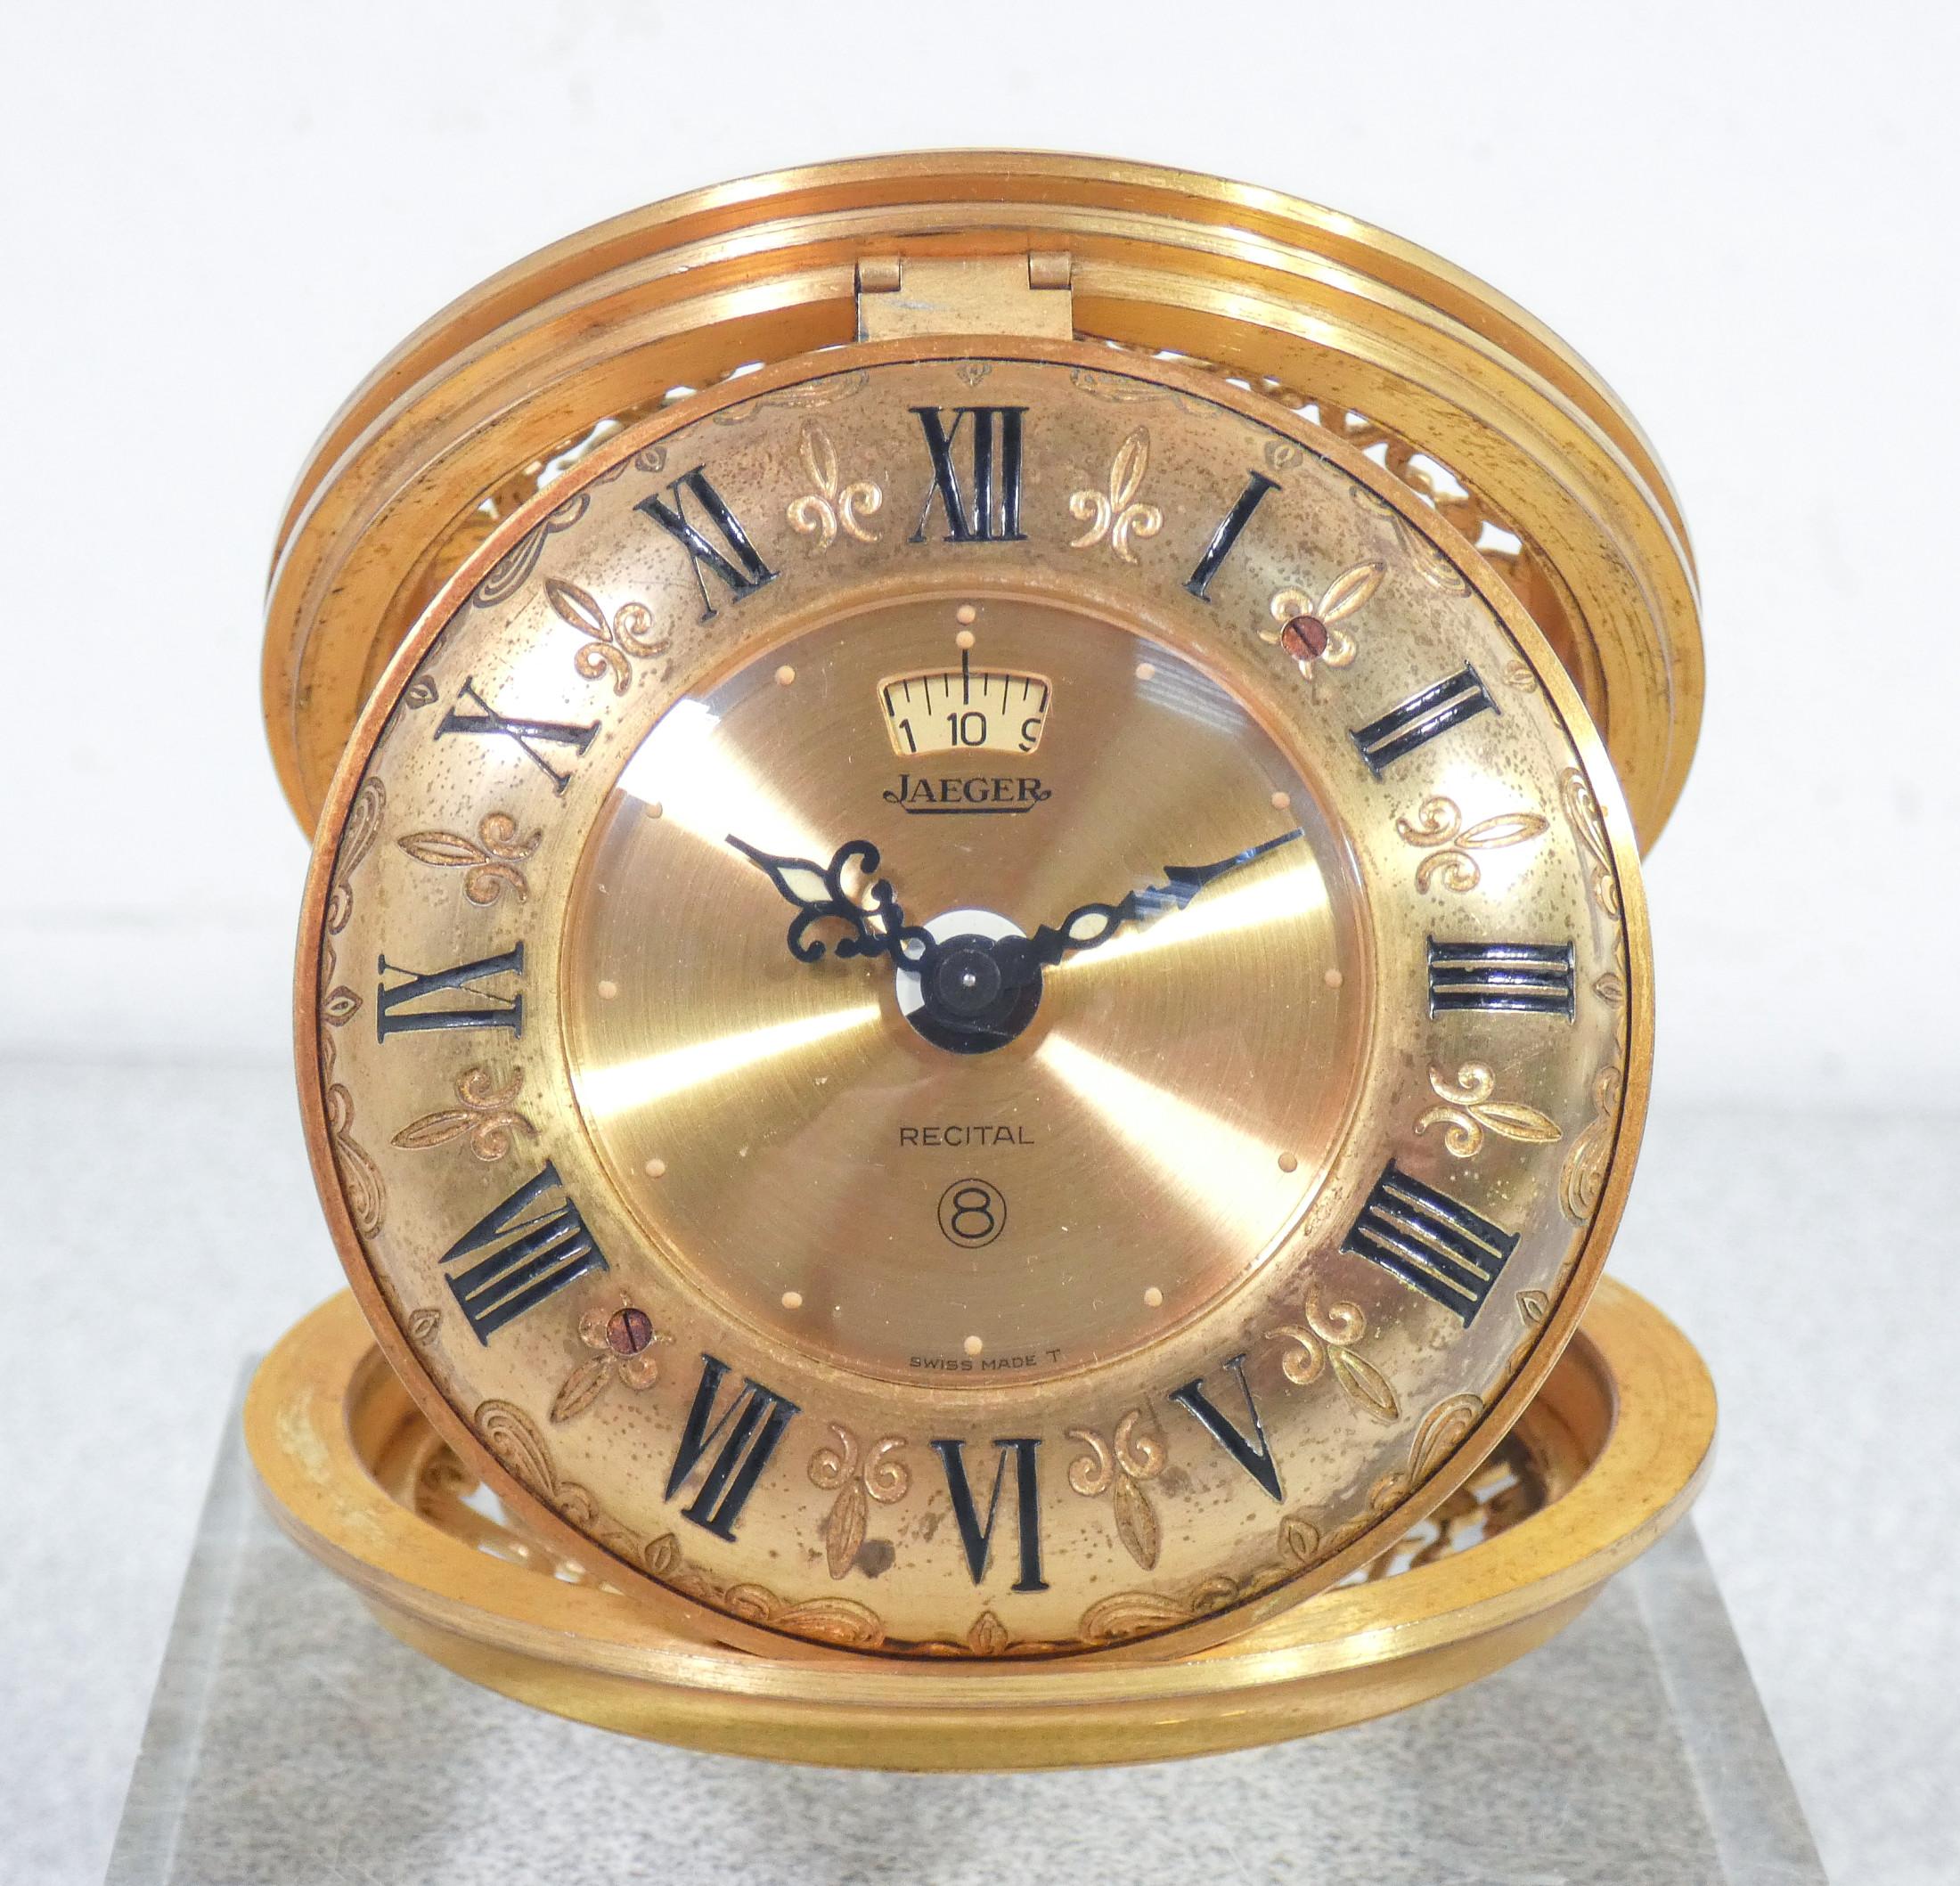 Swiss Jaeger Recital Model 106, Travel Alarm Clock, 8-Day Charge, Switzerland, 1940s